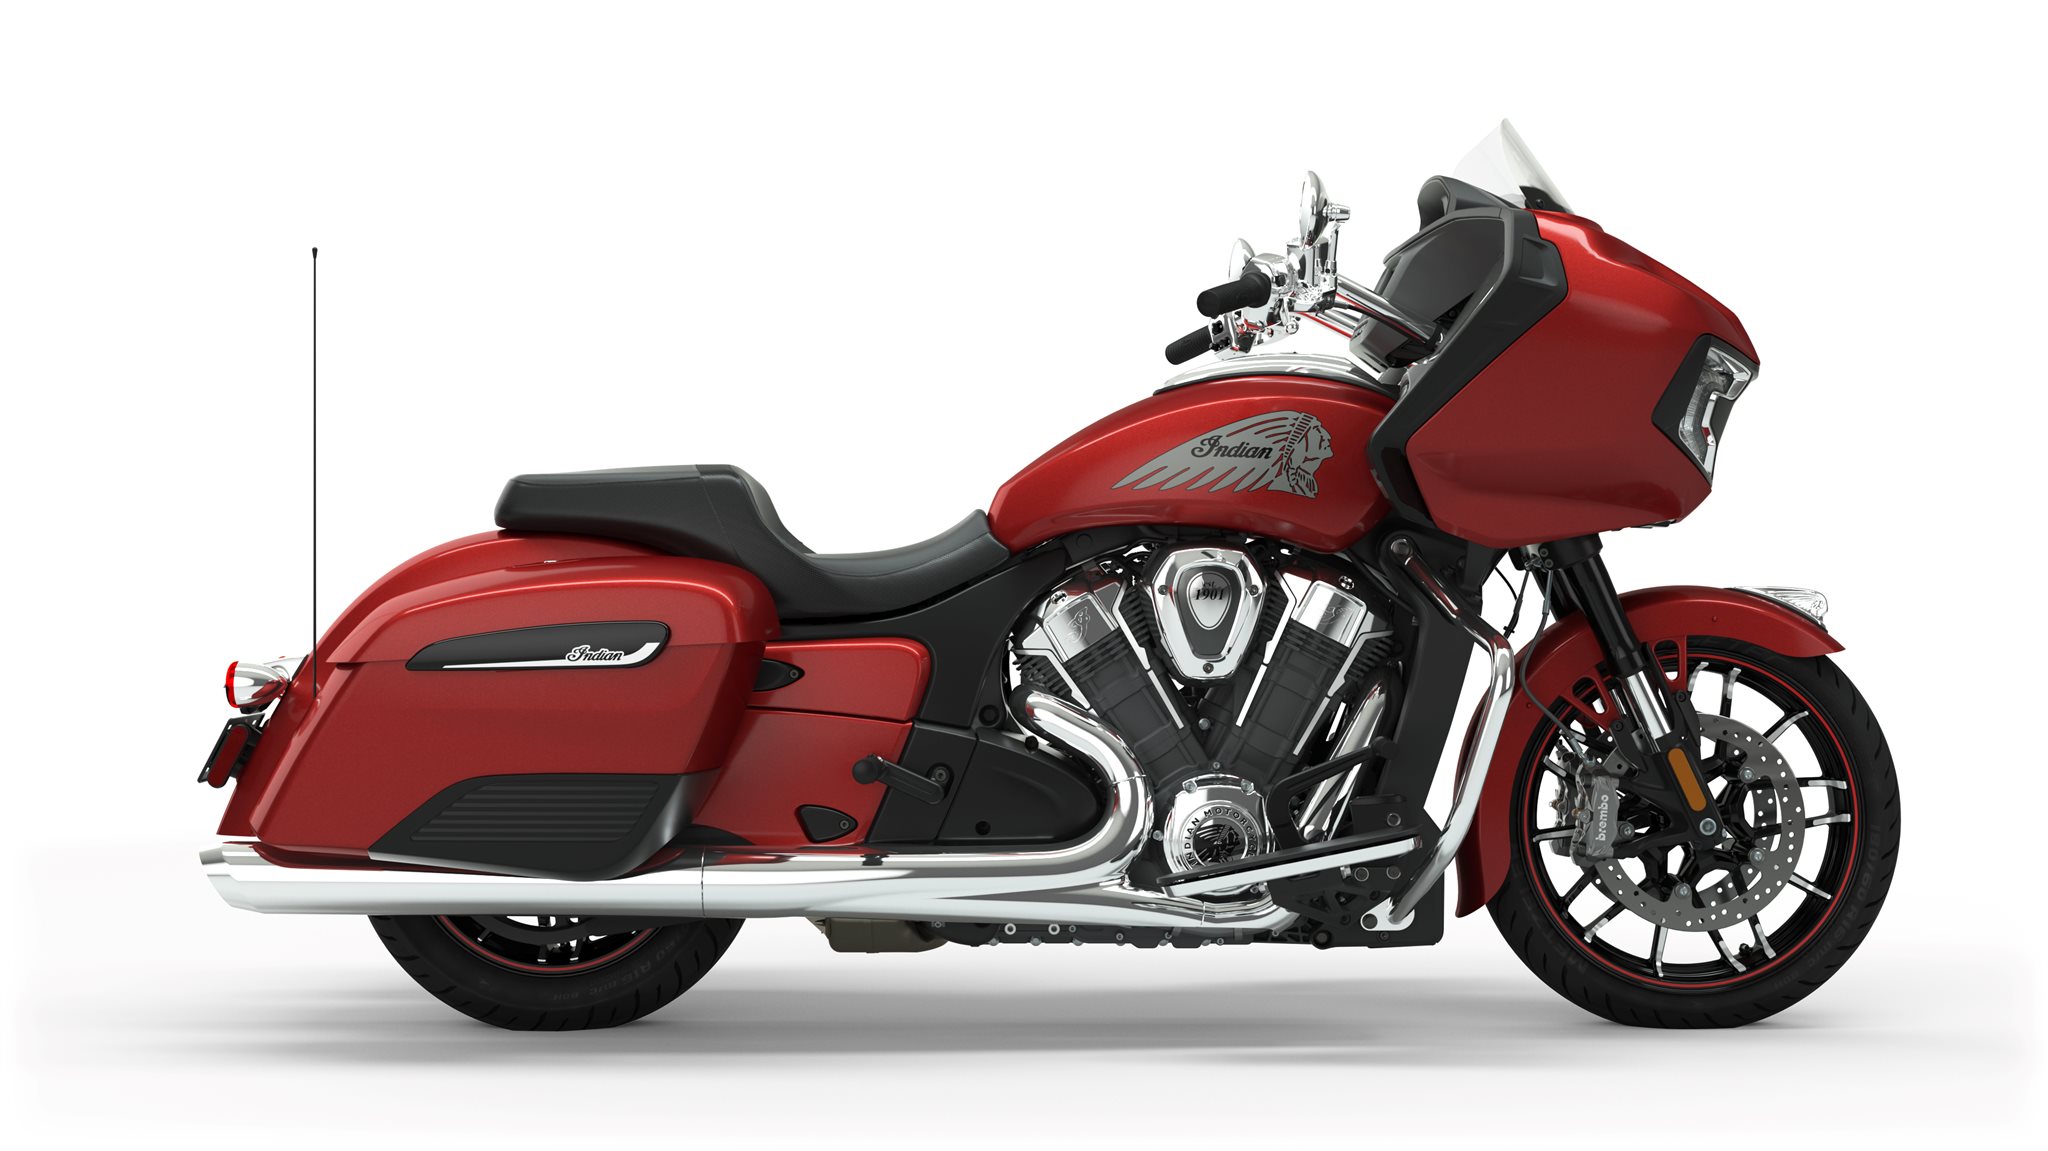 Motorrad Vergleich Indian Challenger Limited 2020 Vs Harley Davidson Touring Road Glide Limited Fltrk 2020